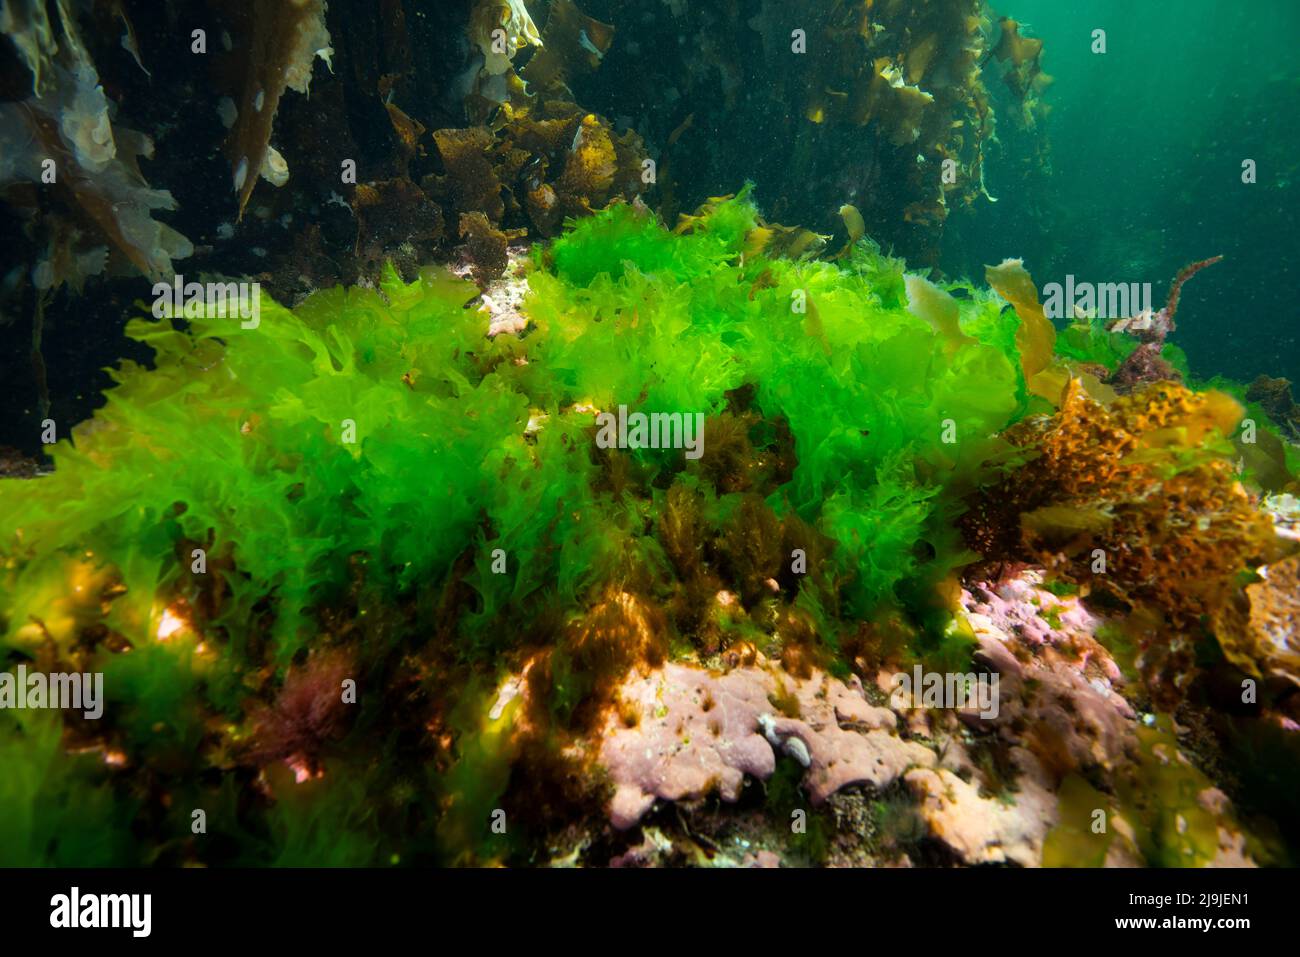 Sea Lettuce underwater in the St. Lawrence River in Canada. Stock Photo